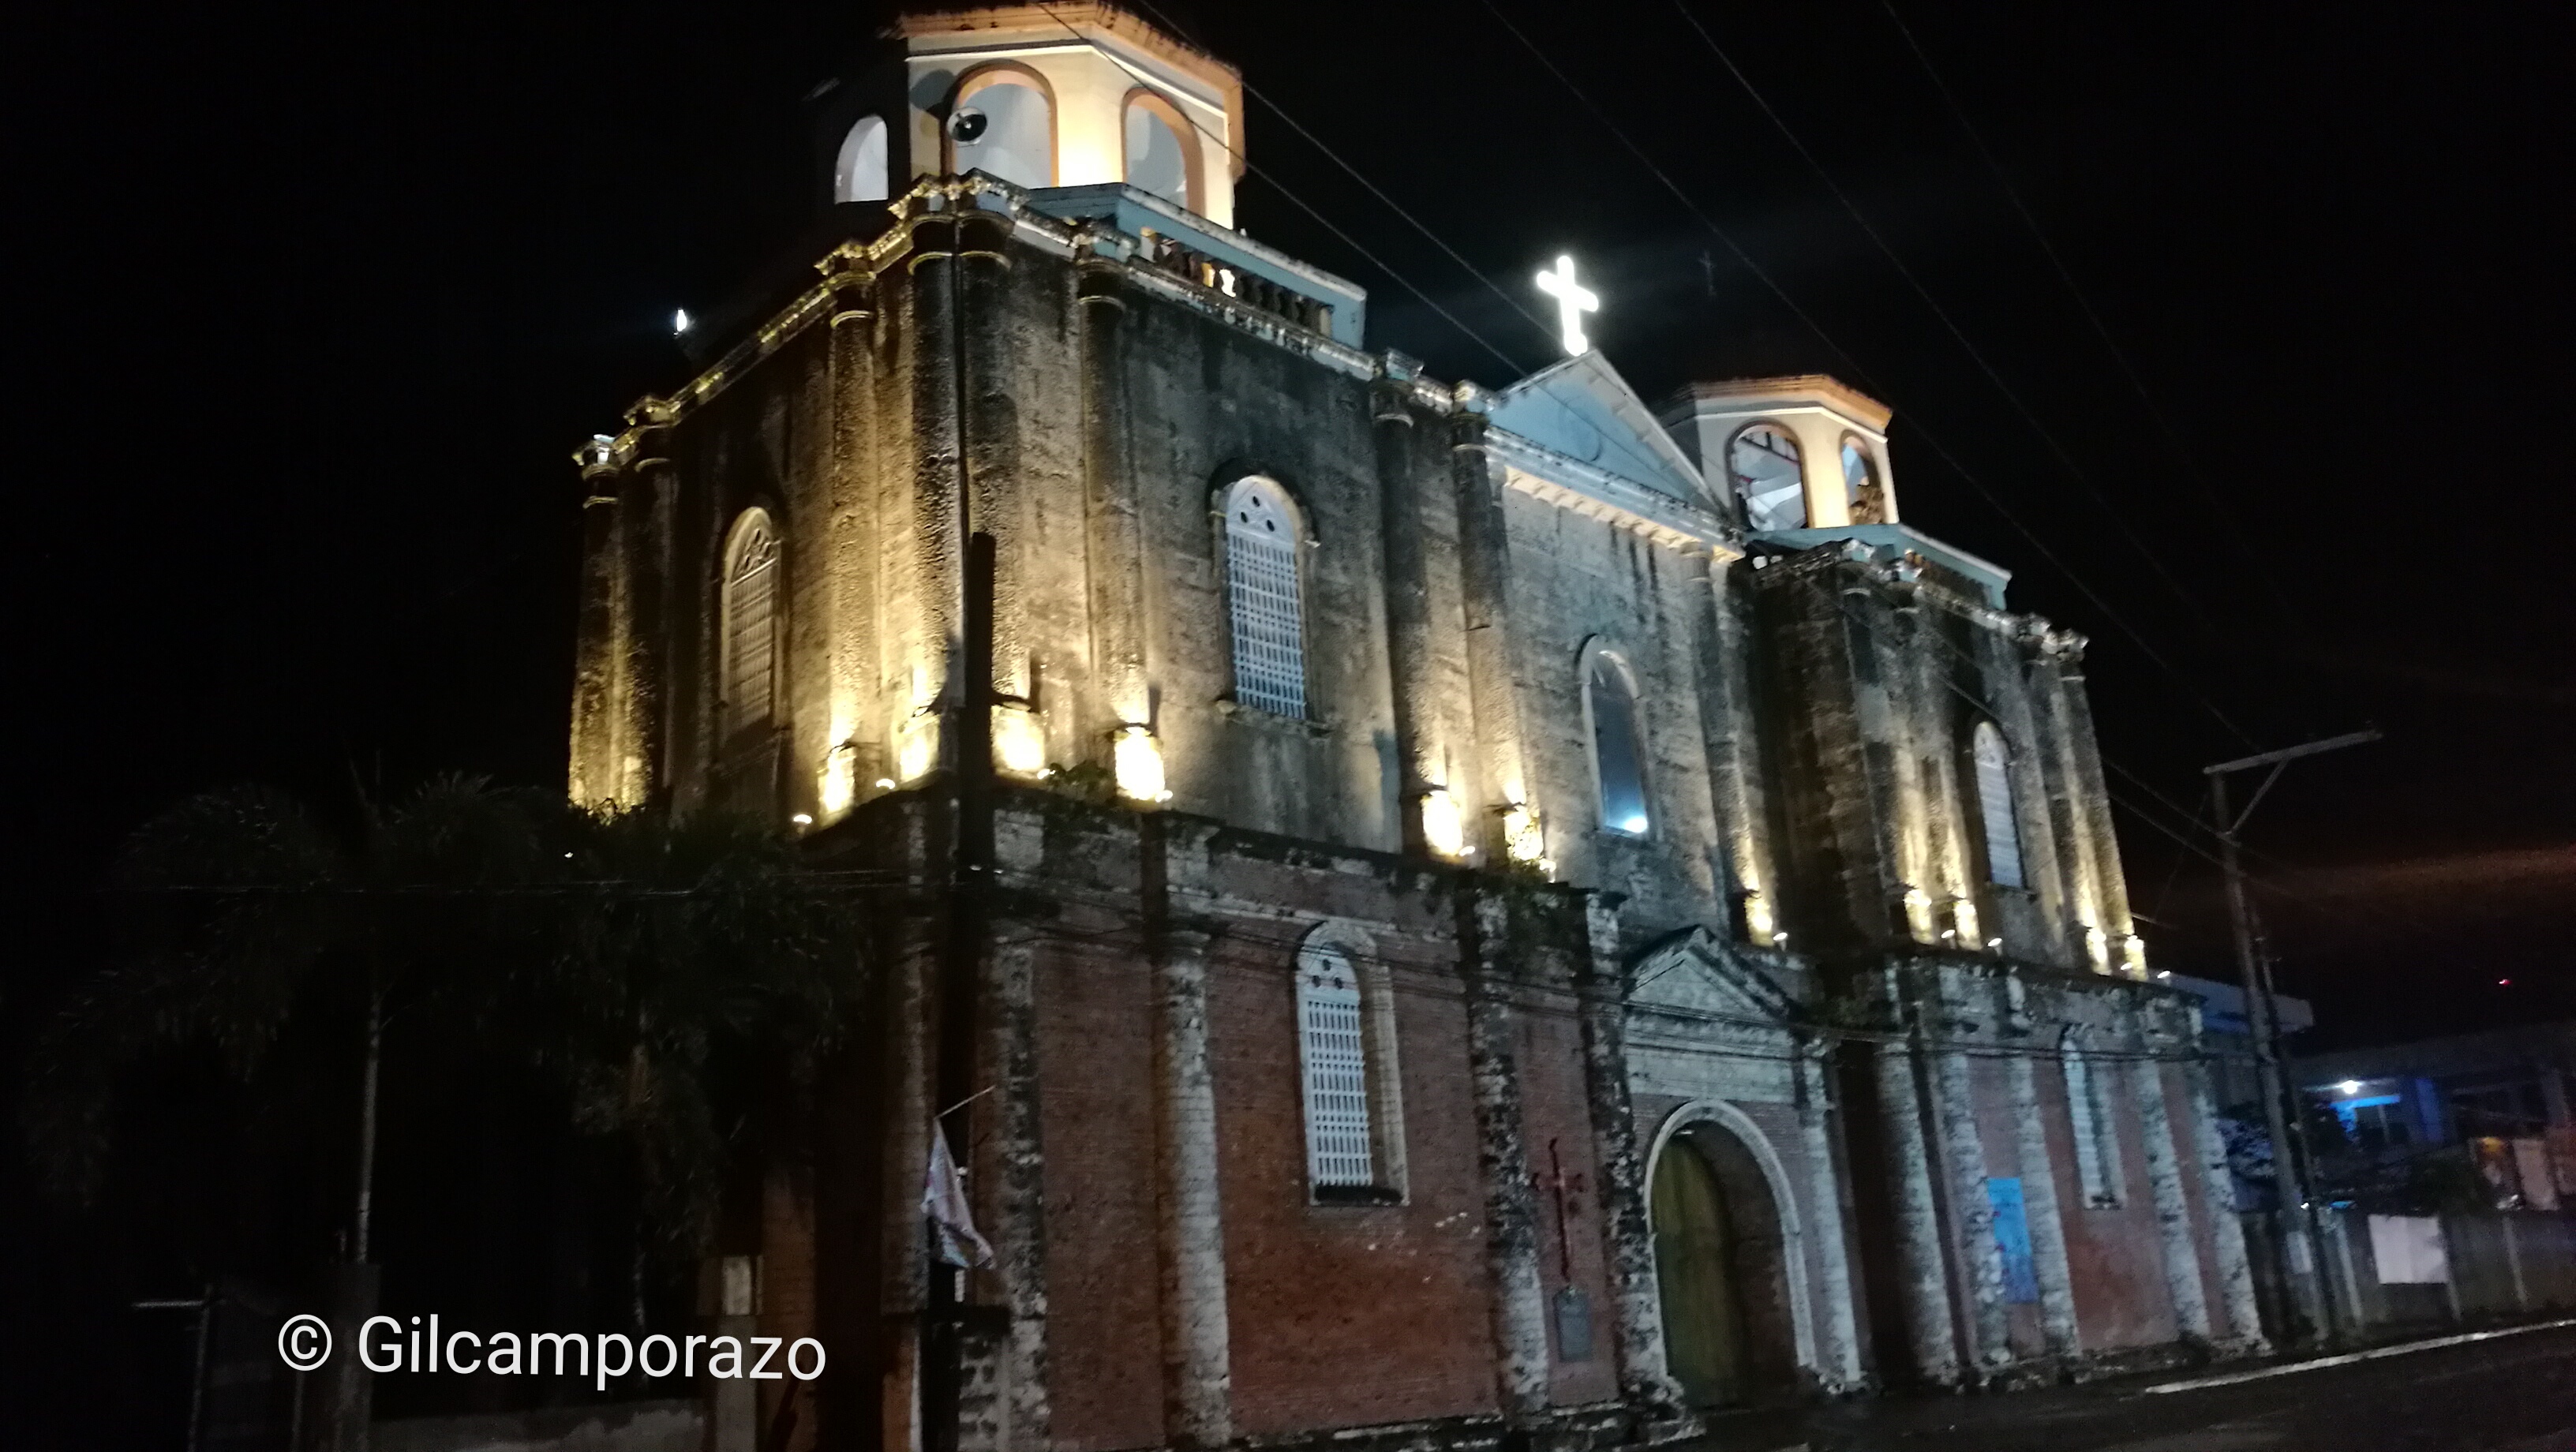 OLPGV Catholic Church - Gilcamporazo